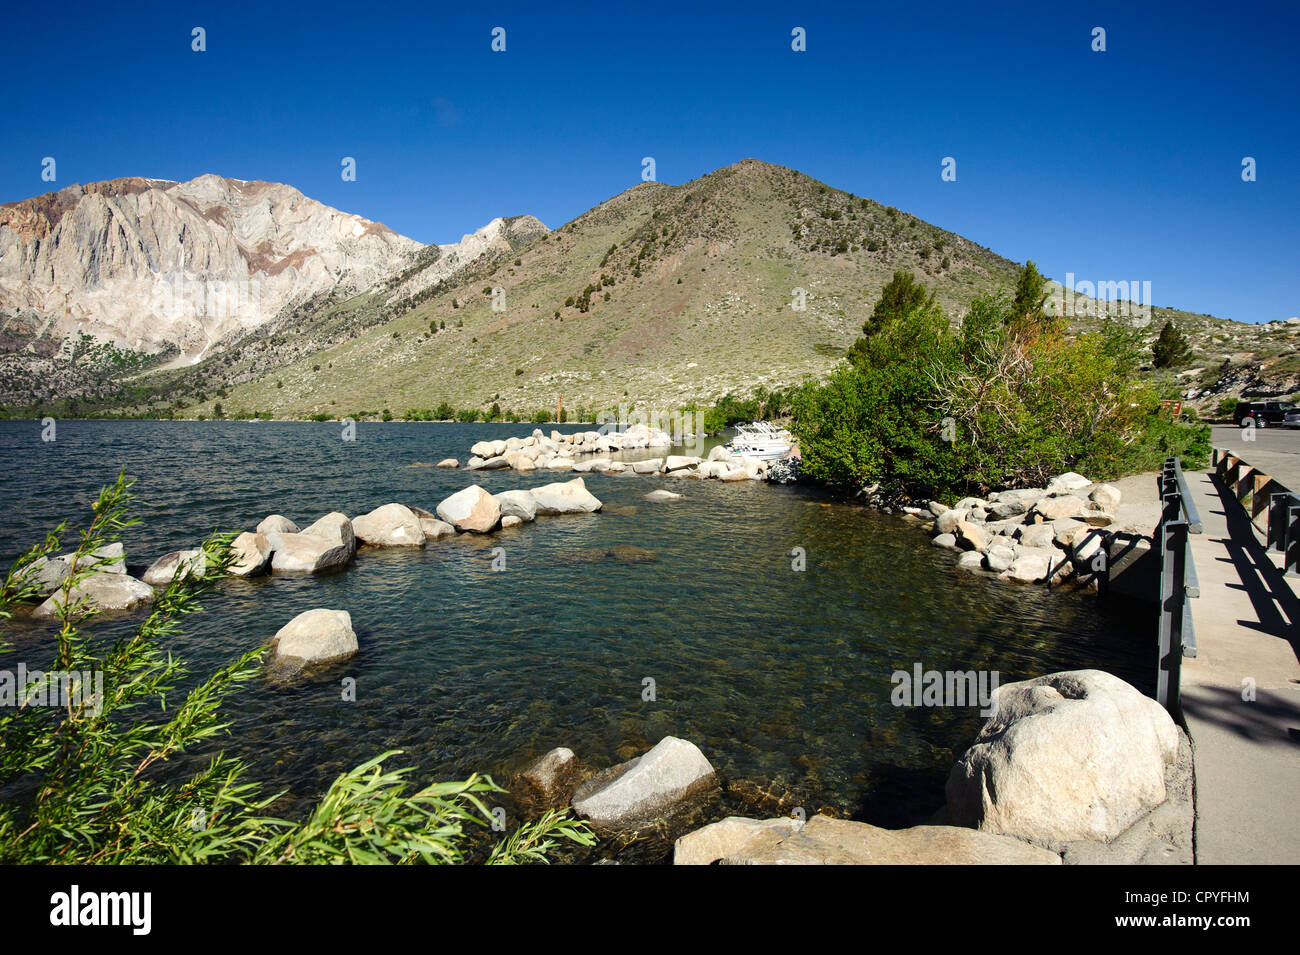 Convict Lake in the High Sierra, California, USA Stock Photo